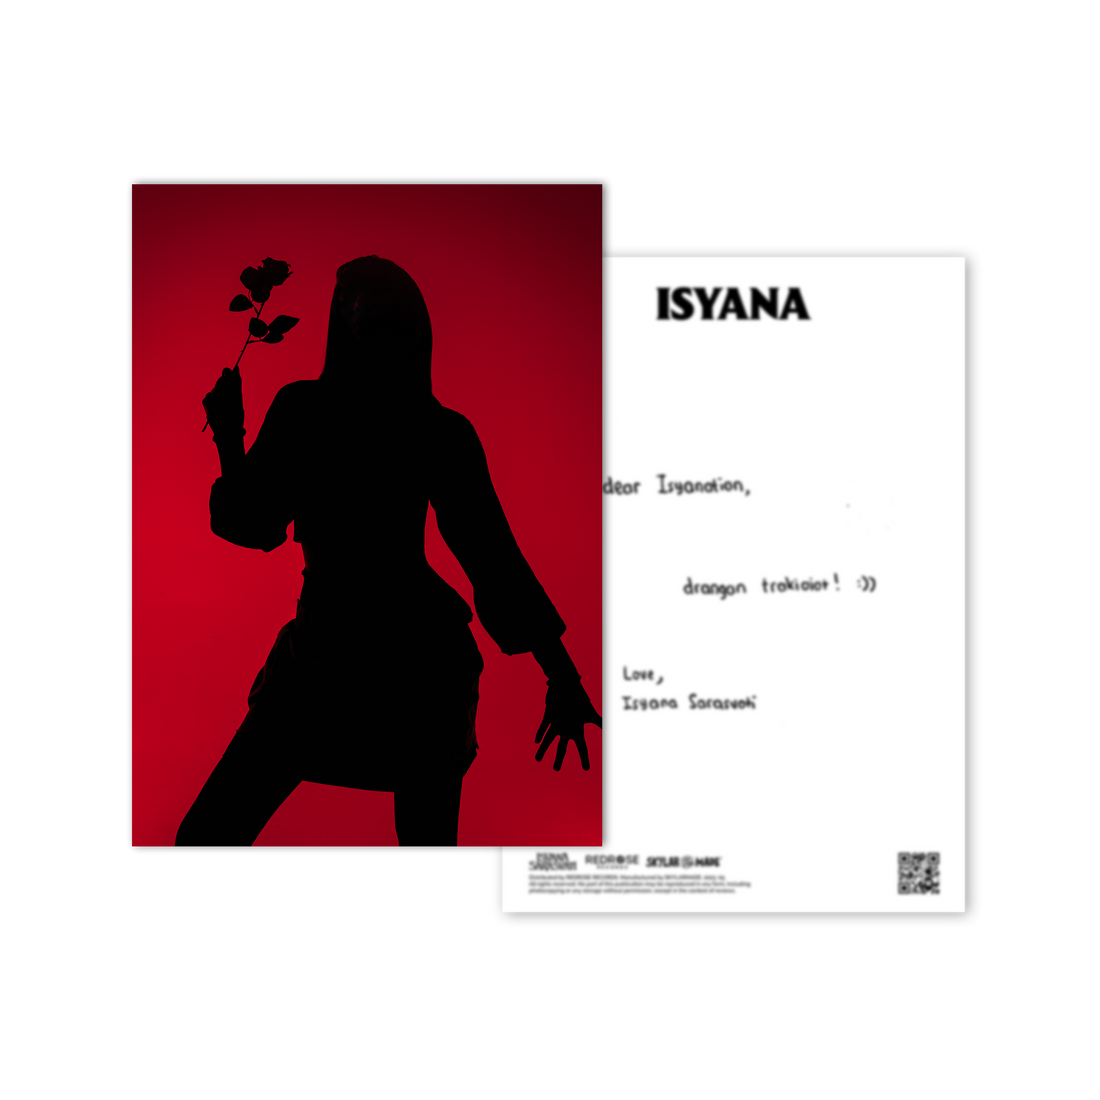 Exclusive Album Boxset Isyana Sarasvati - "ISYANA" White Ver.